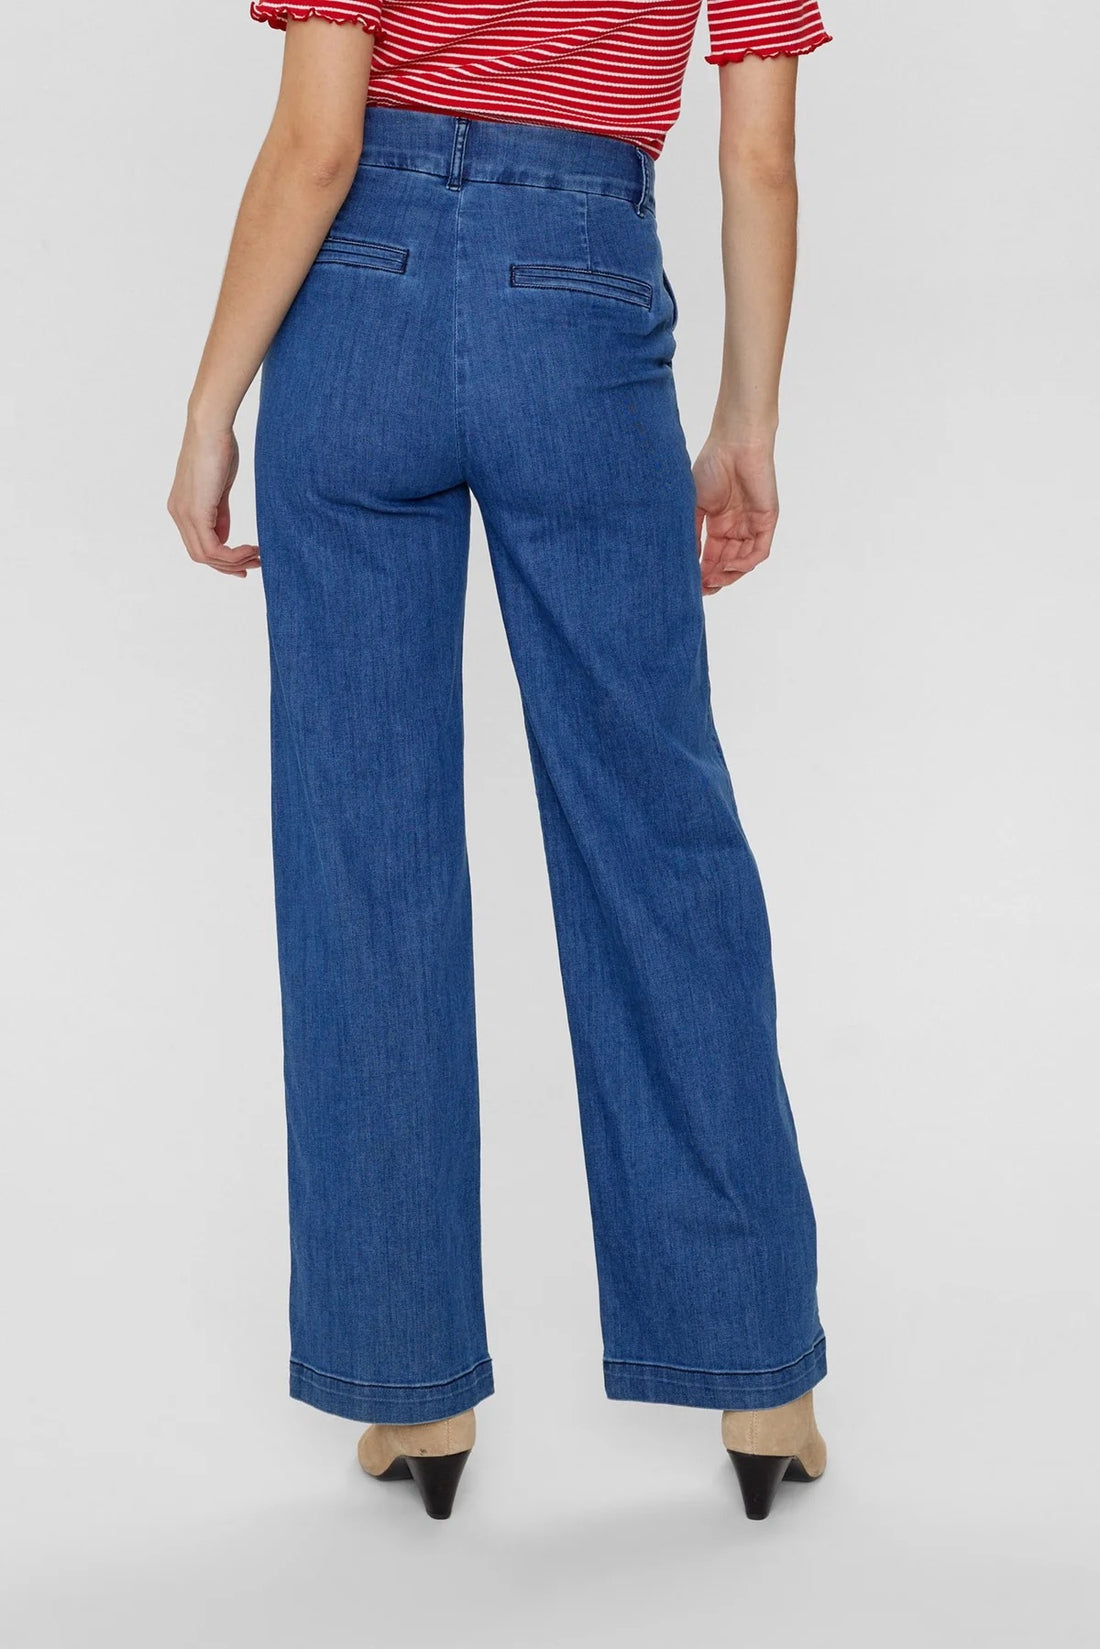 Nümph Nuamber Jeans in Medium Blue Wash